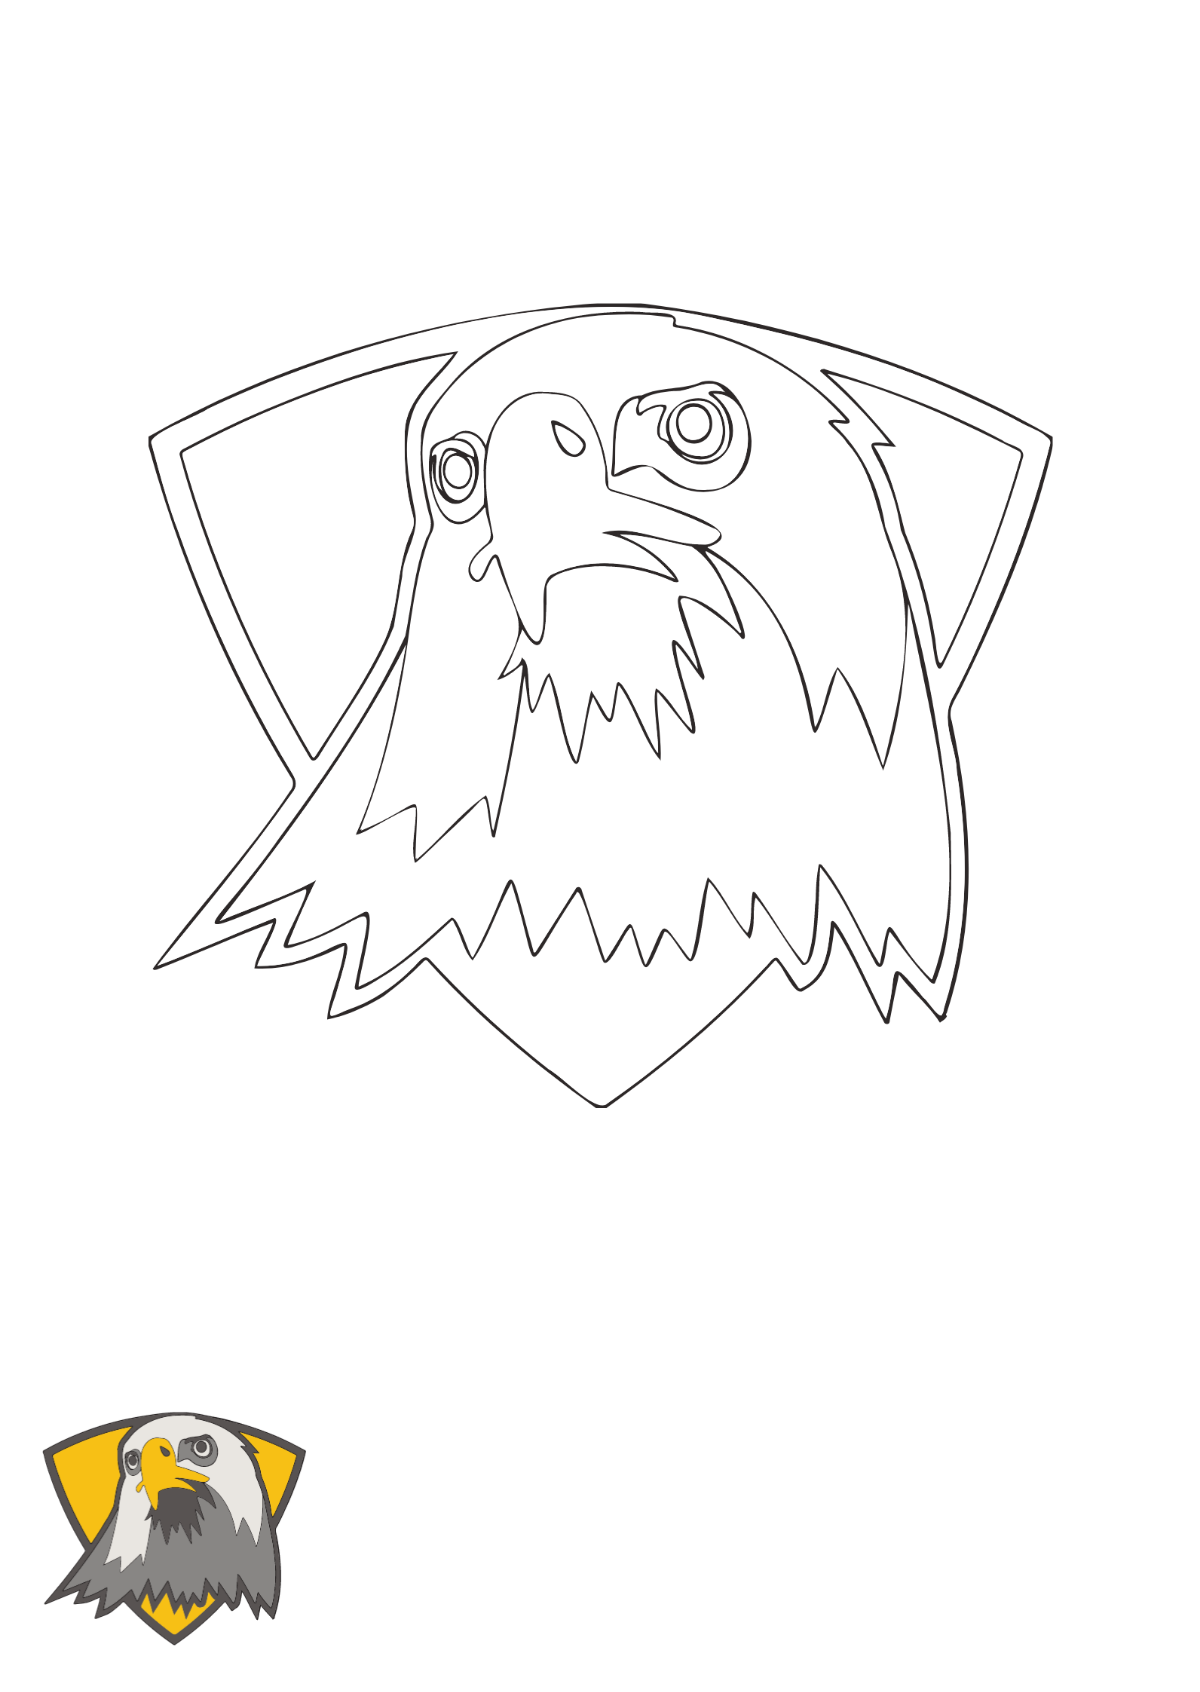 Eagle Mascot coloring page